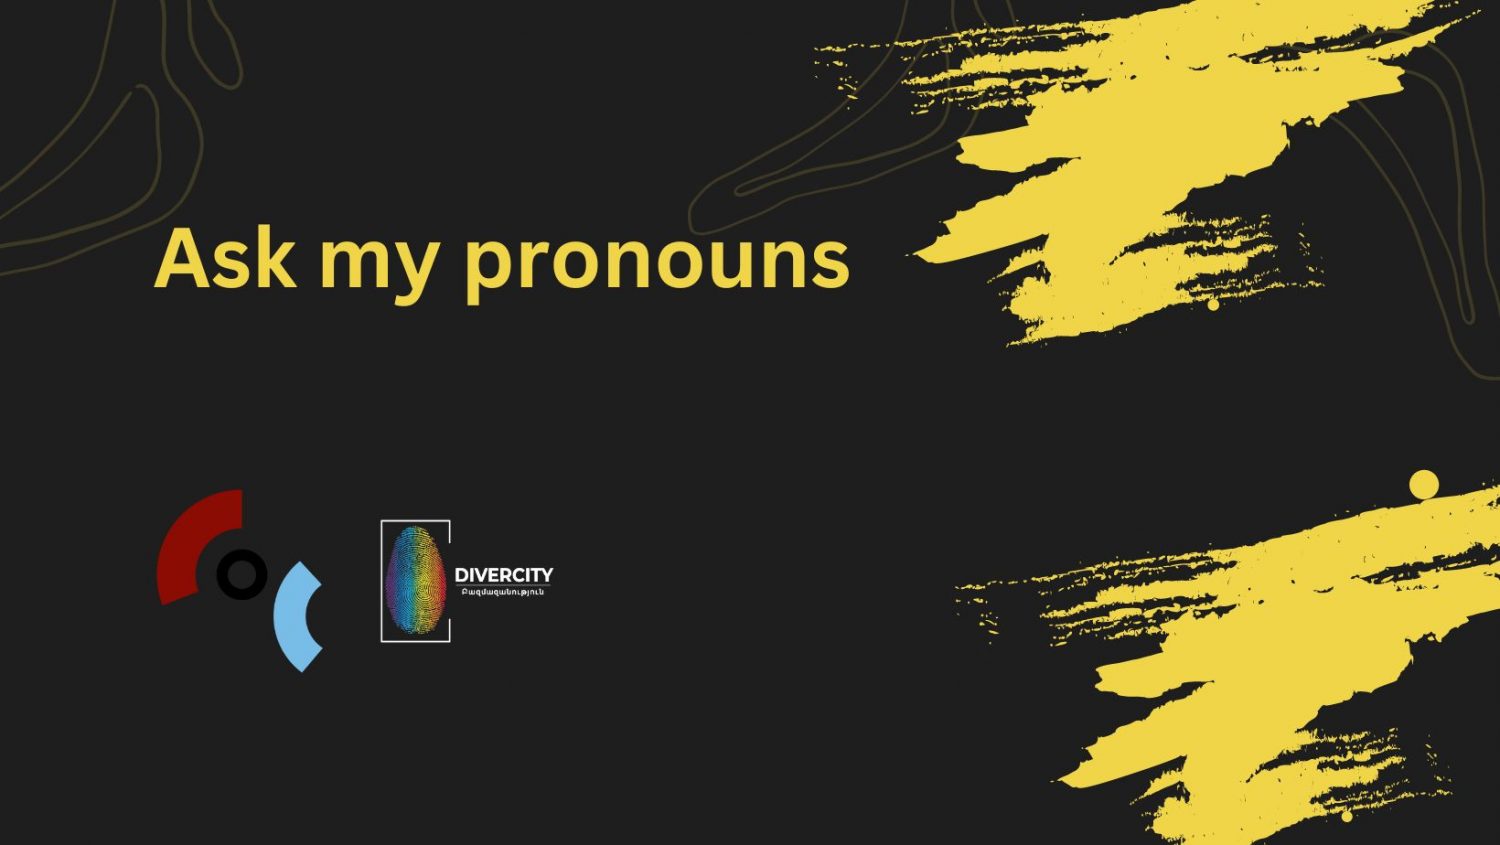 Why the correct pronouns matter